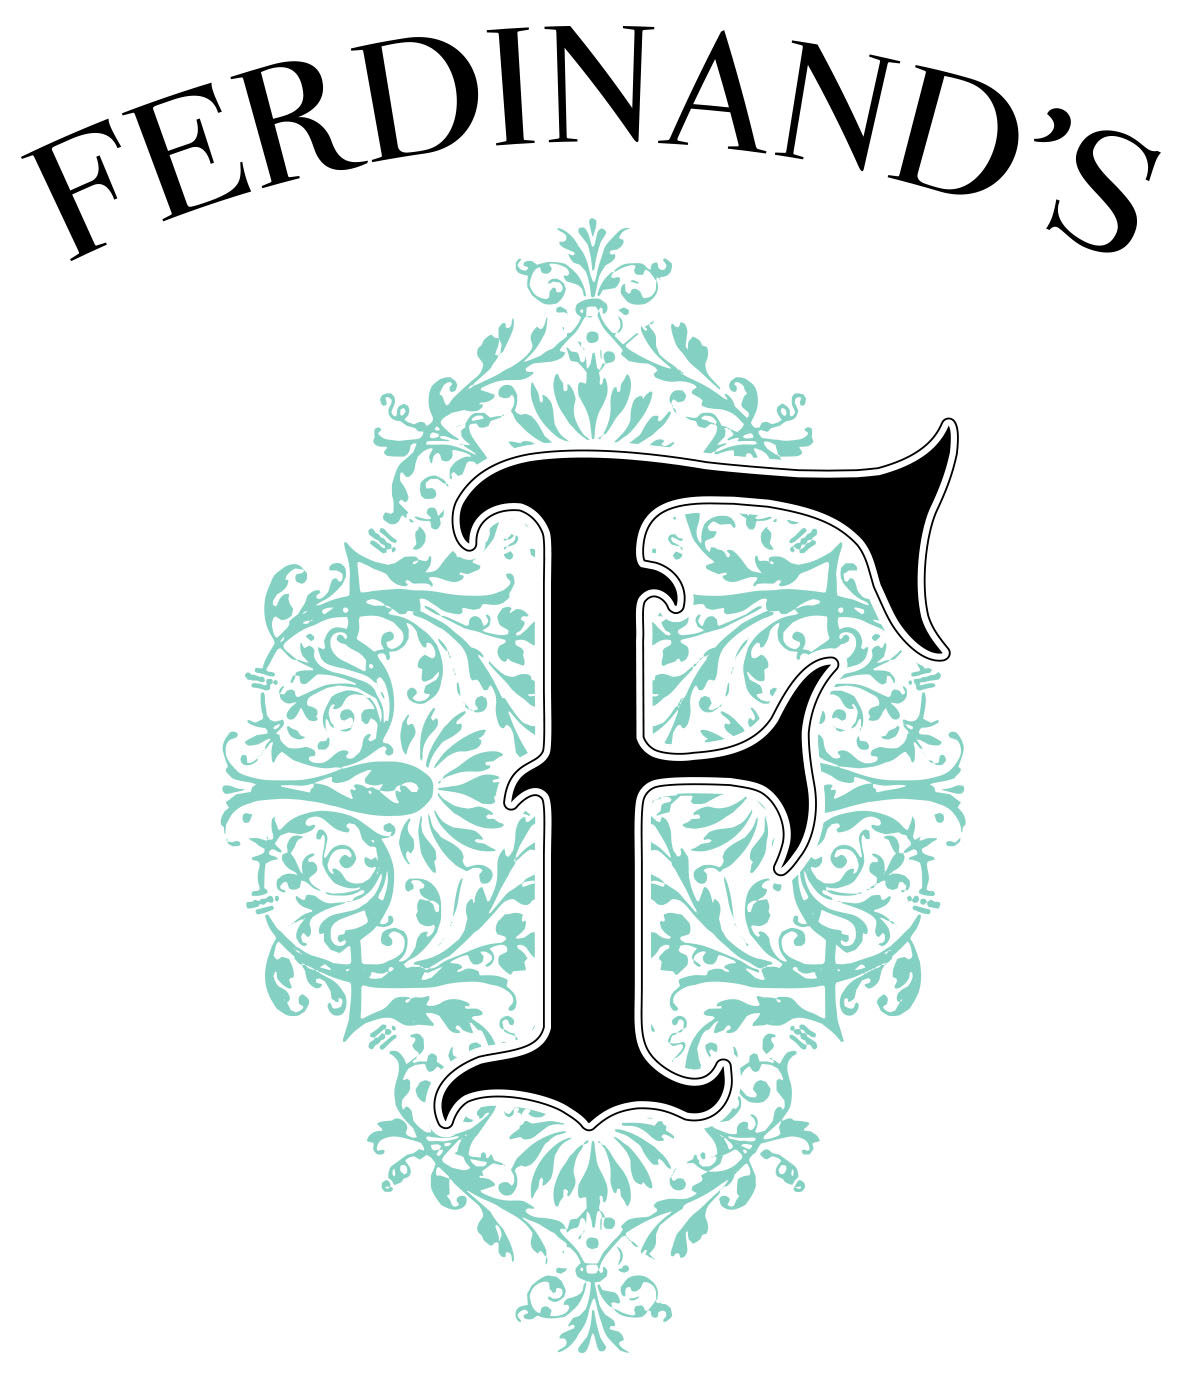 Ferdinands Gin